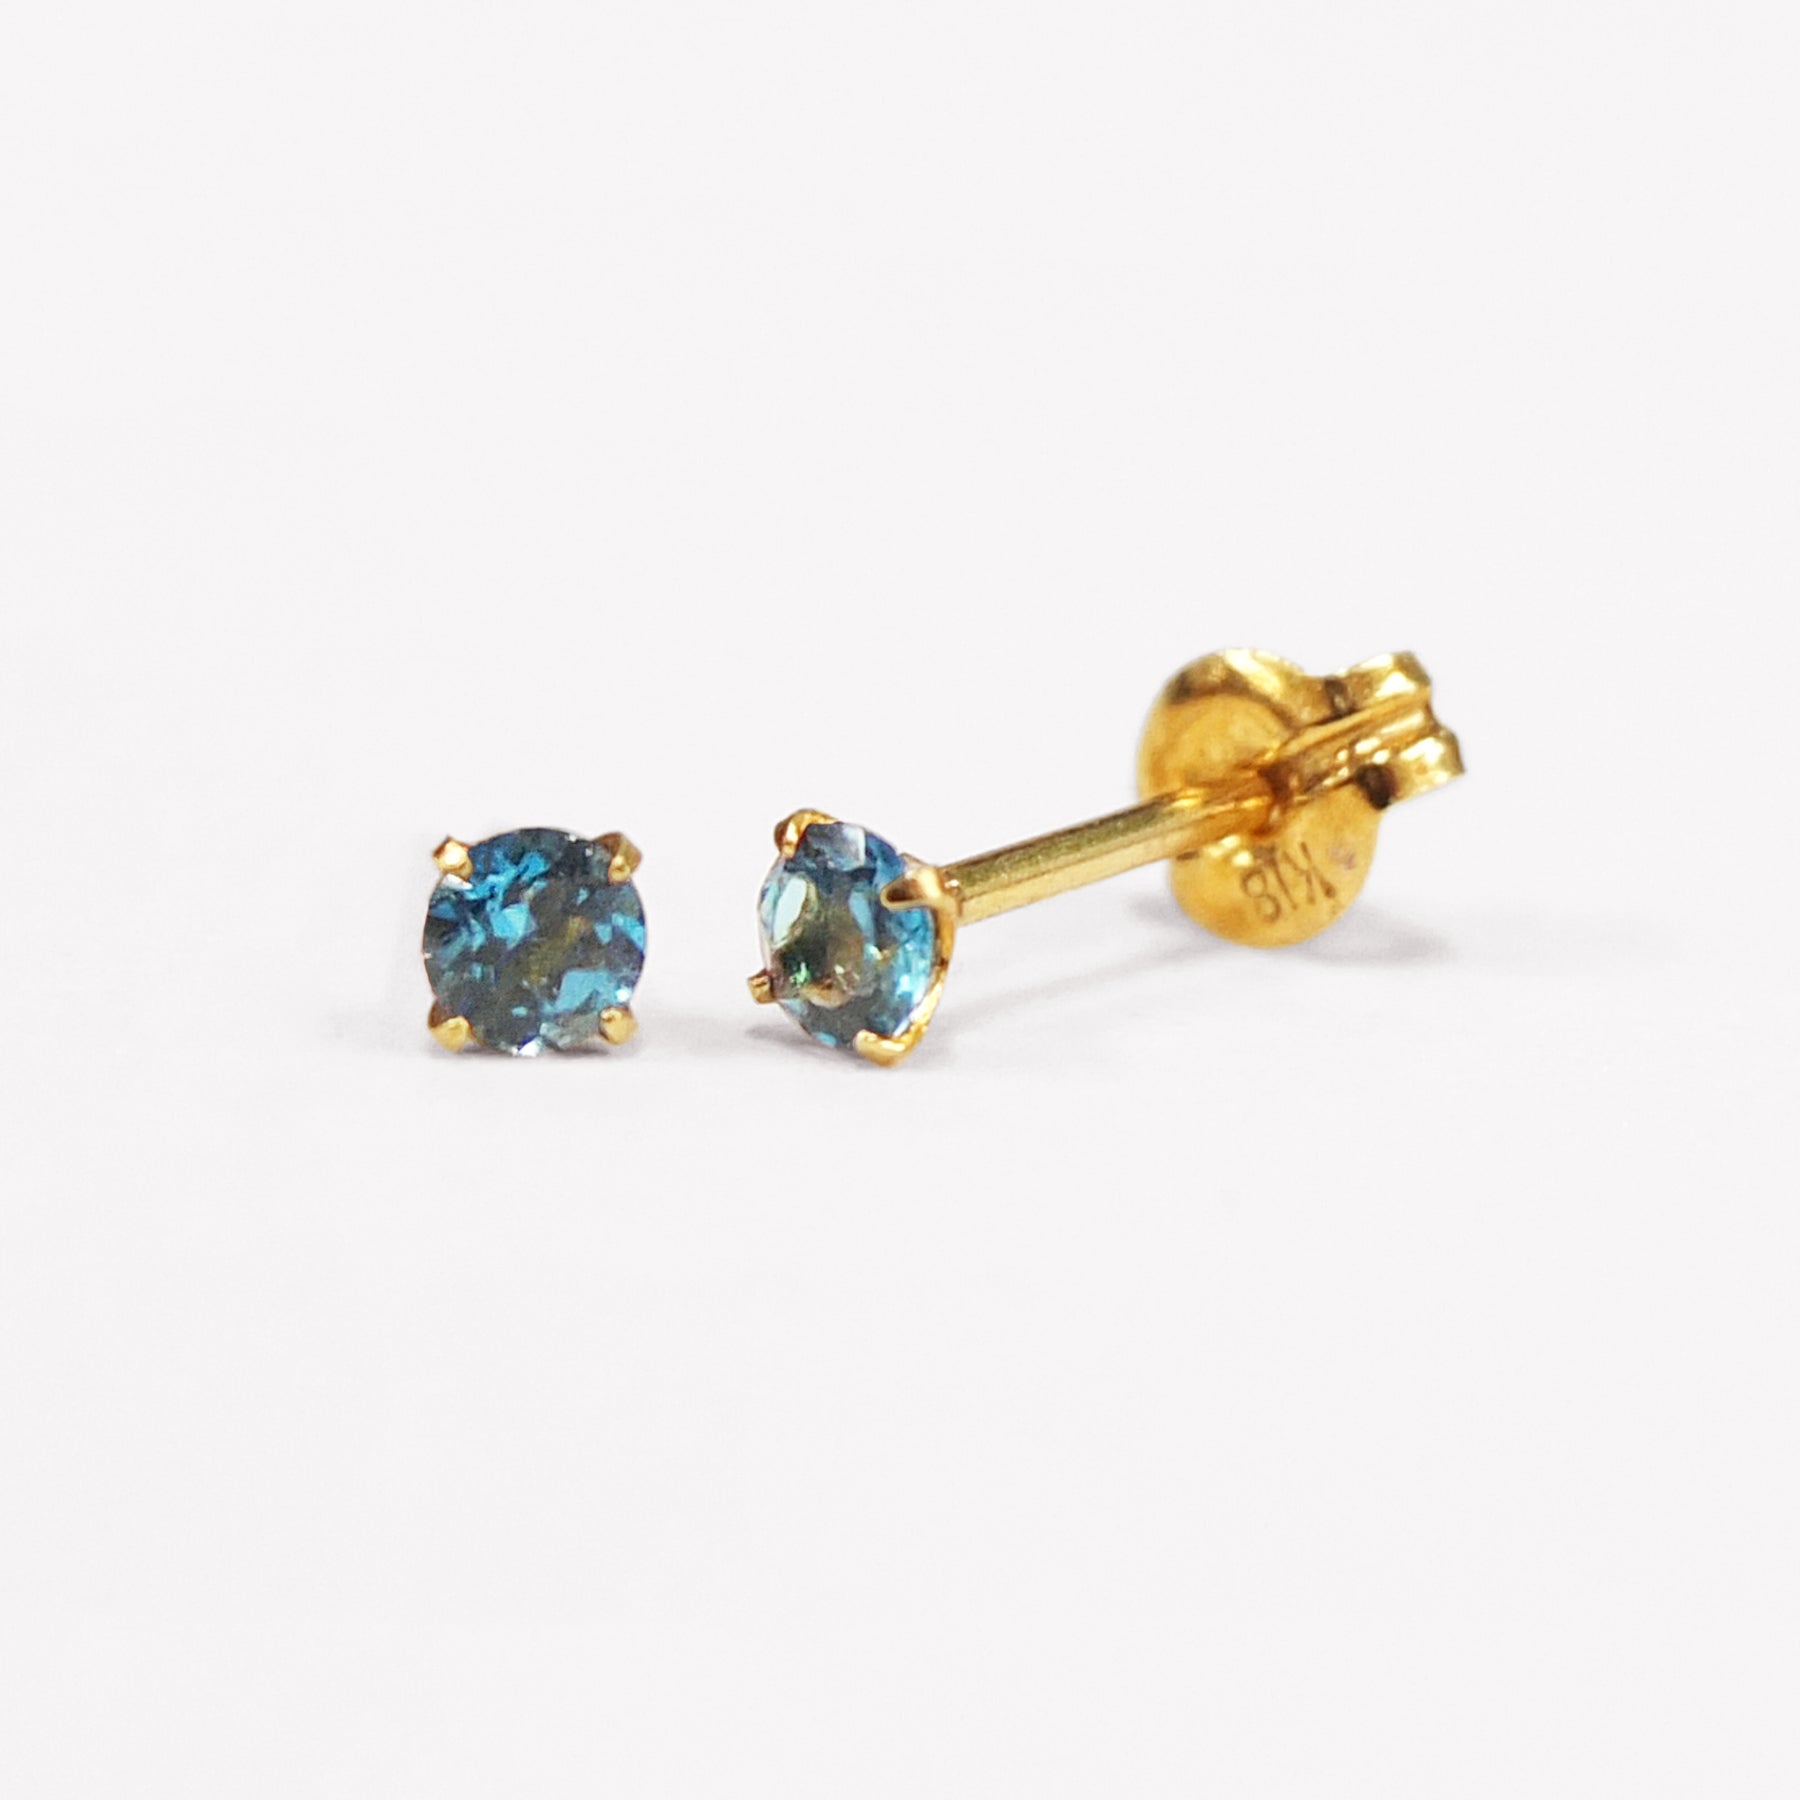 [Second Earrings] 18K Yellow Gold London Blue Topaz Earrings - Product Image